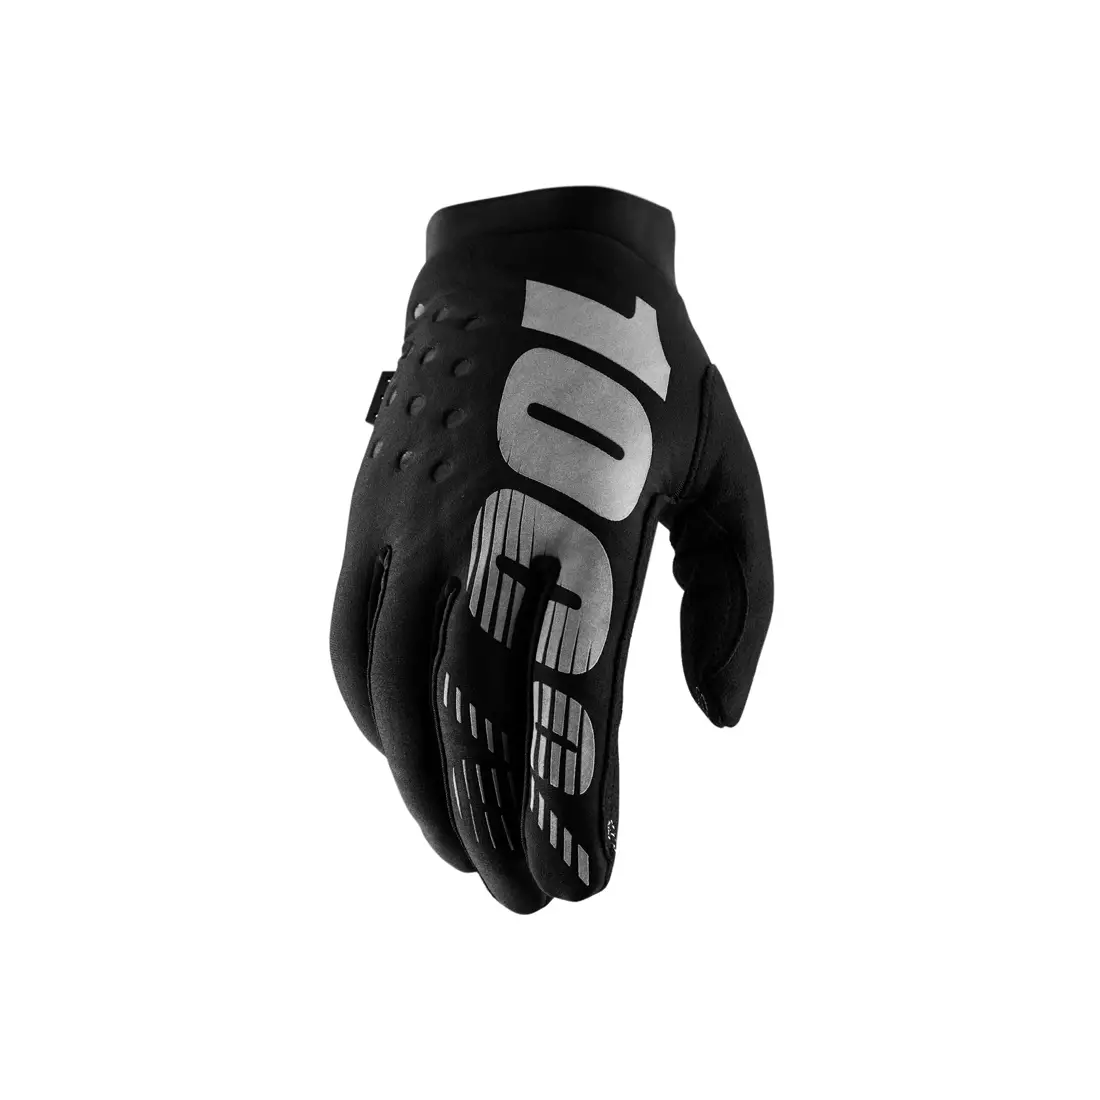 100% women's cycling gloves BRISKER black grey STO-11016-057-10